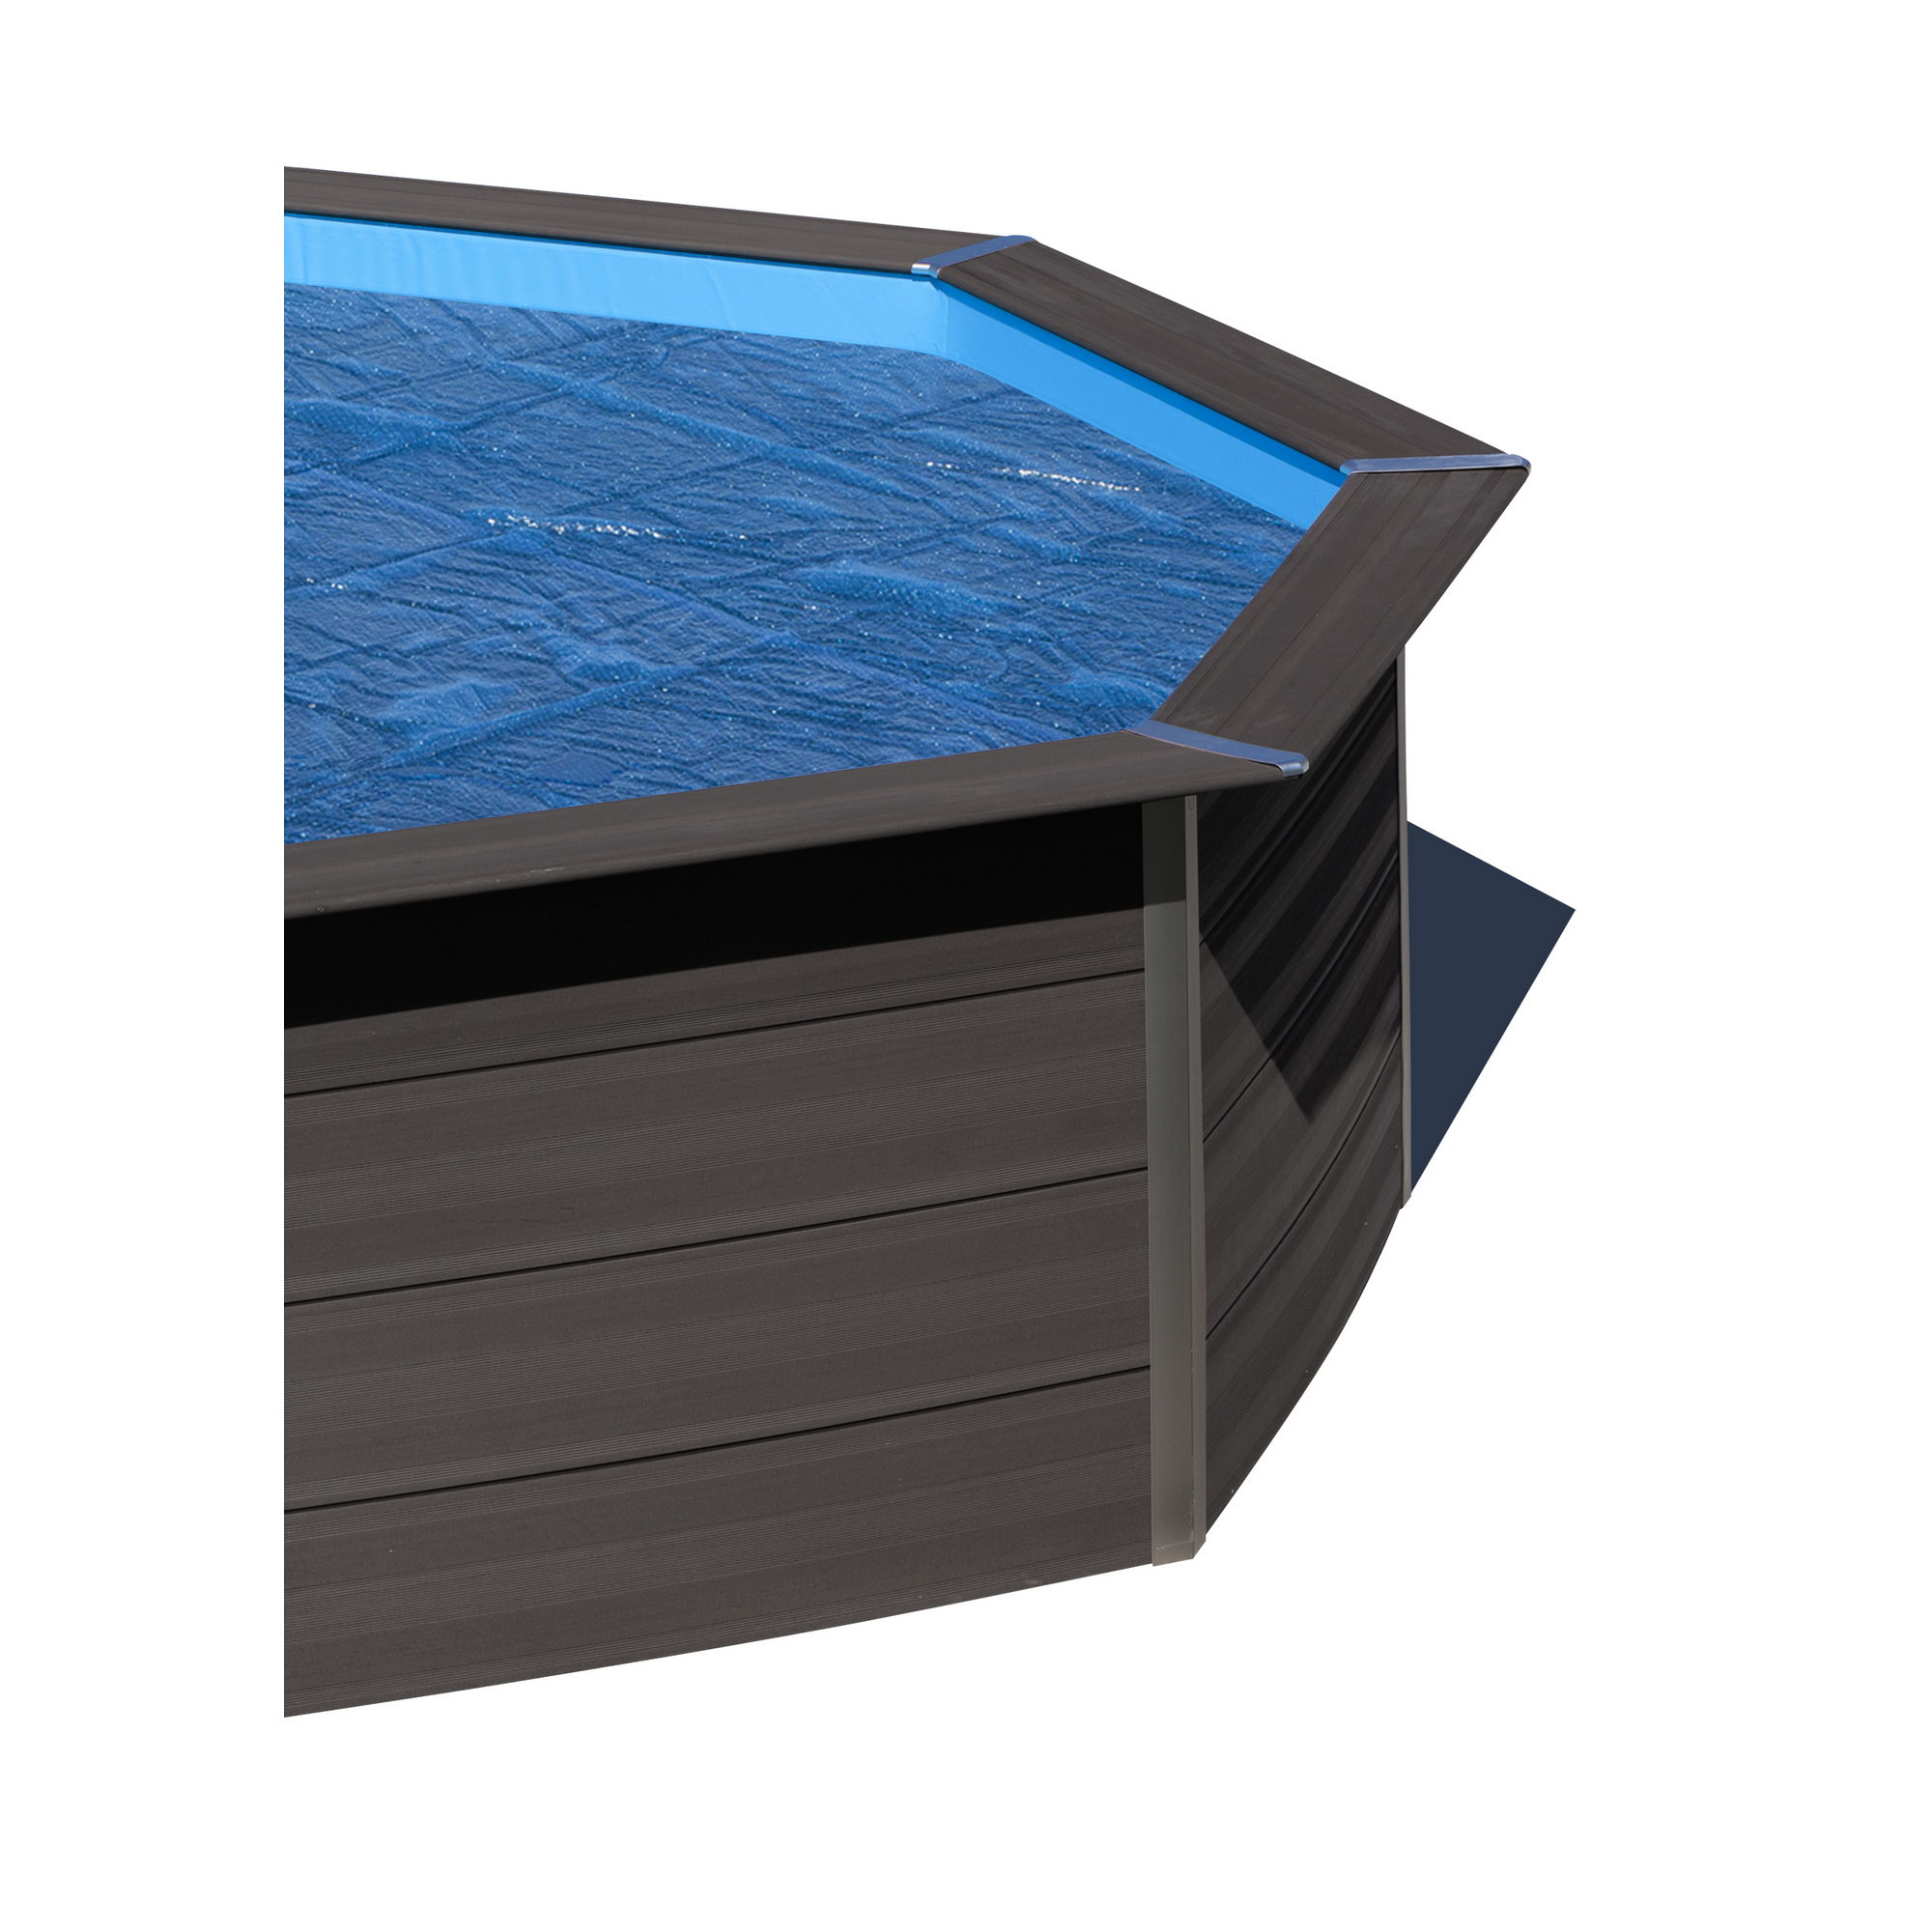 Pool-Abdeckplane 'Isothermabdeckung' blau 758 x 338 cm + product picture